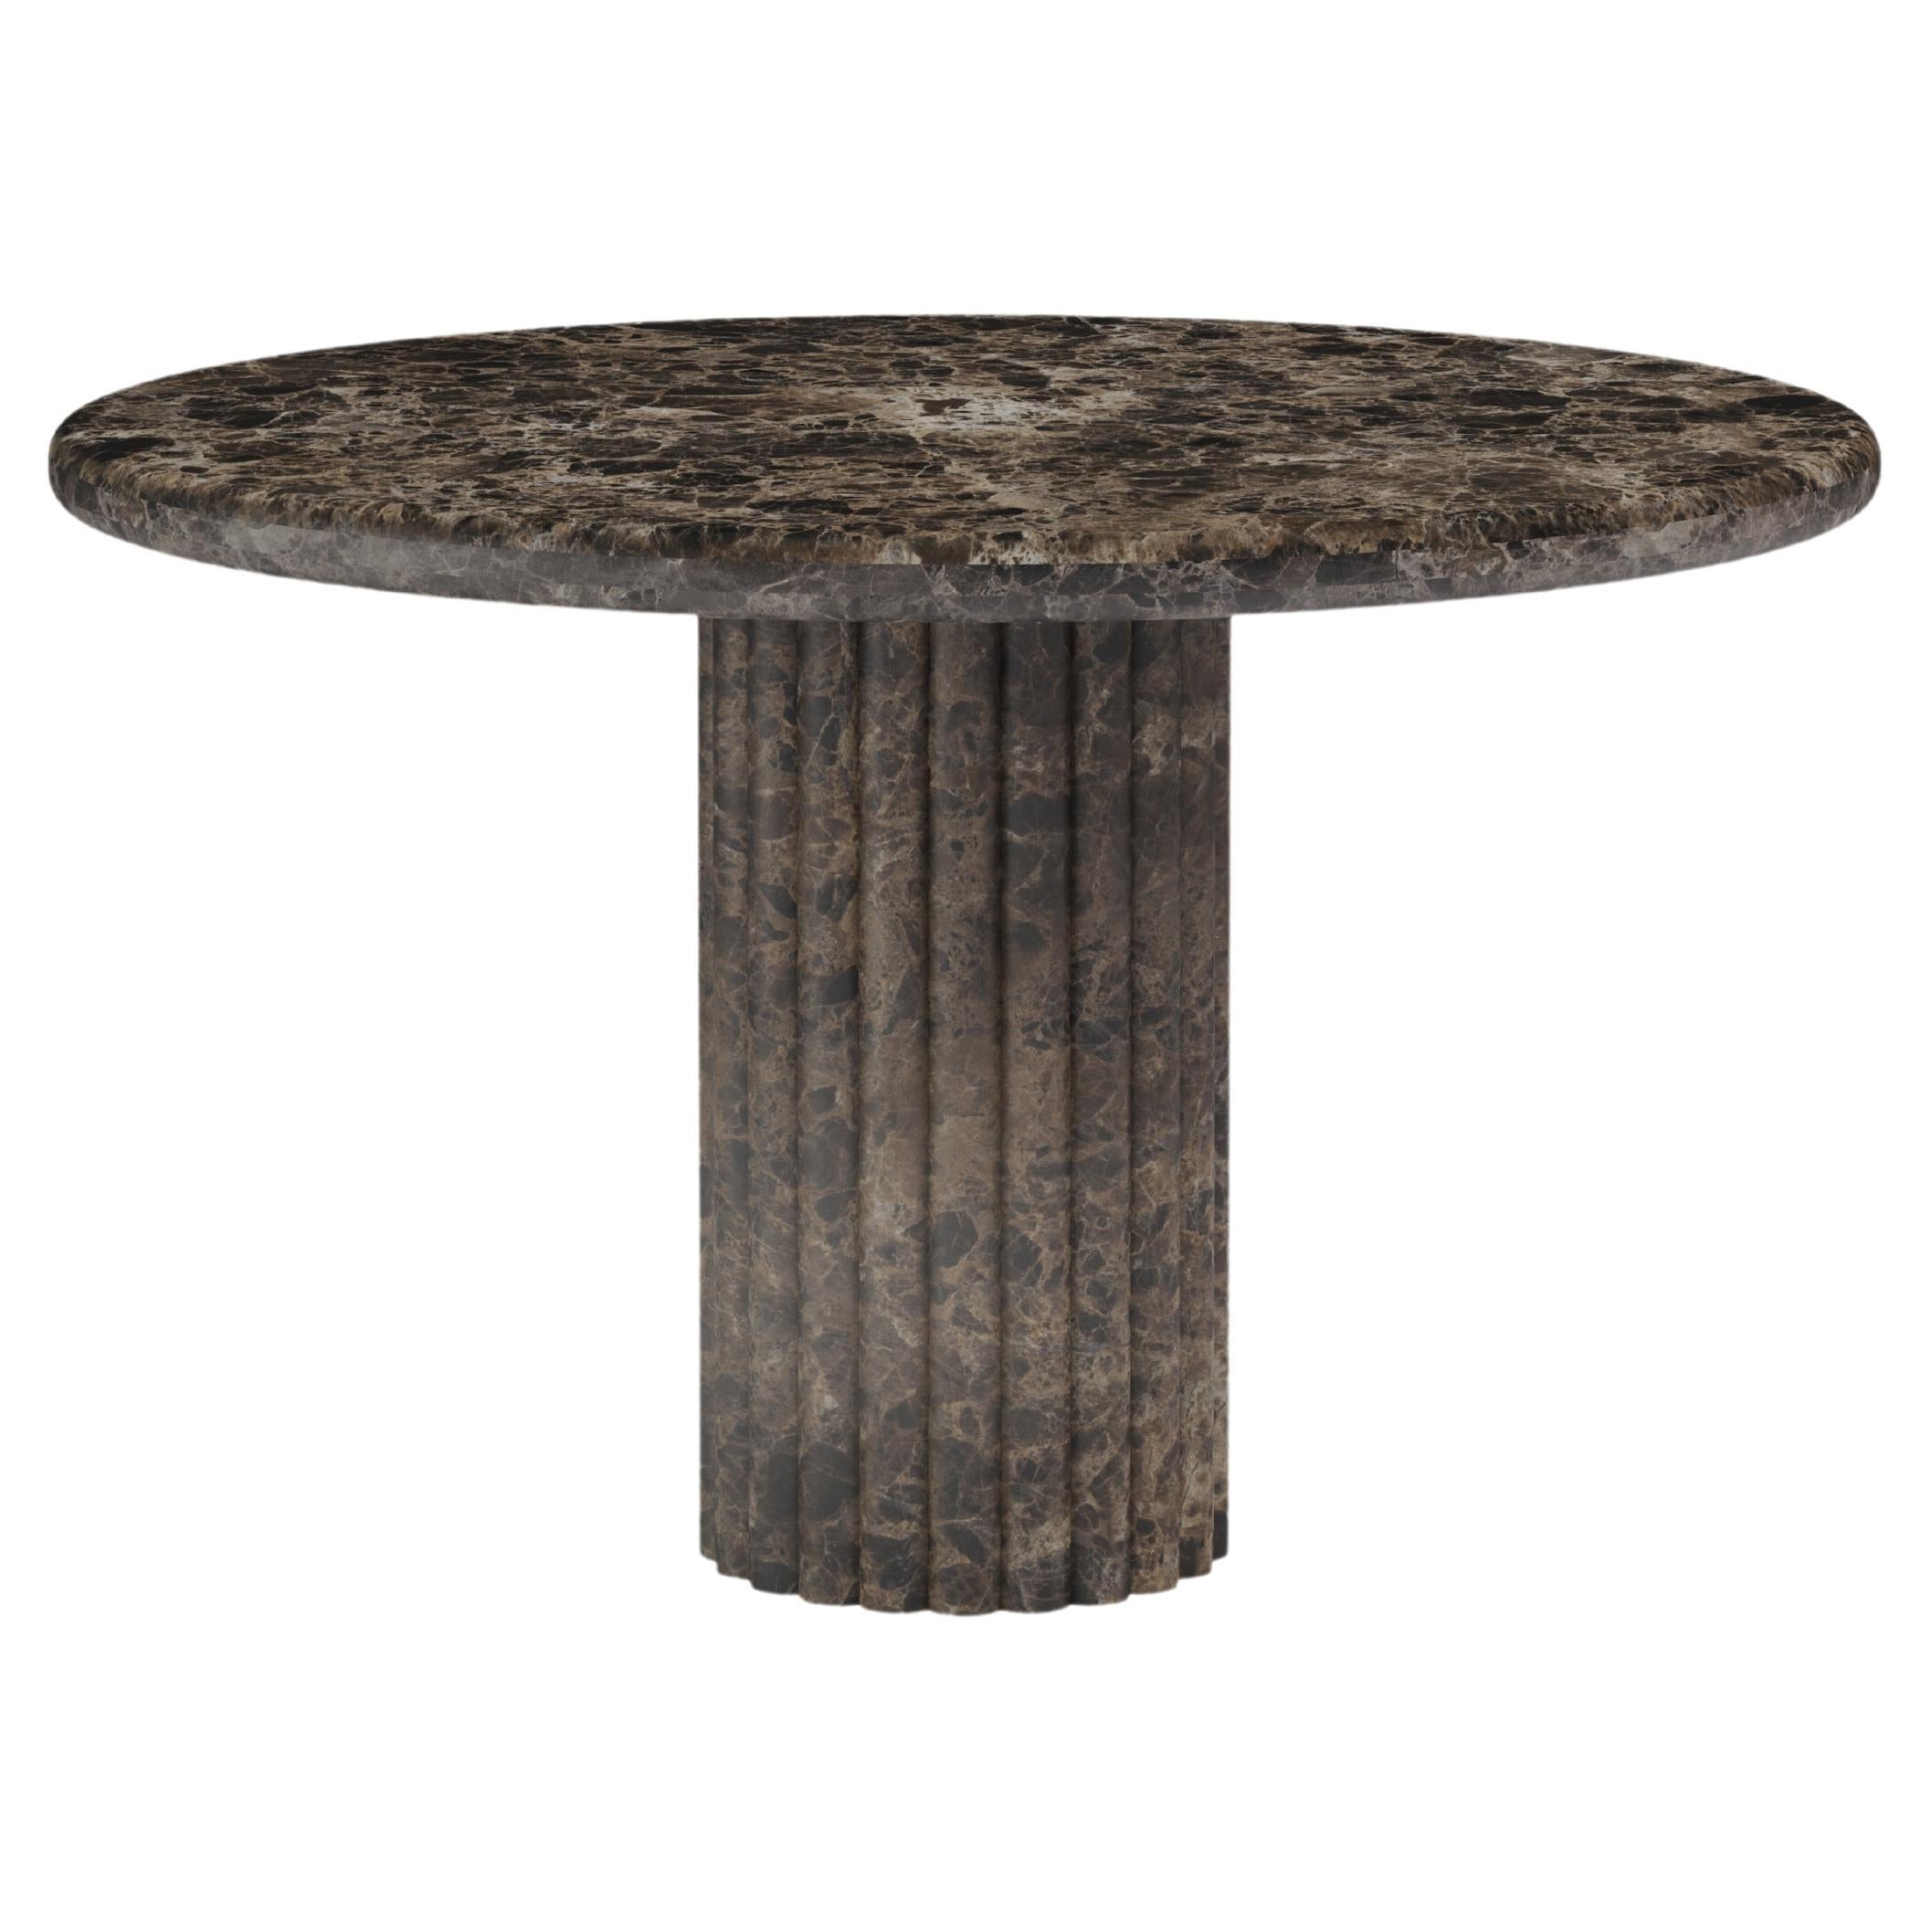 FORM(LA) Fluta Round Dining Table 48”L x 48”W x 30”H Dark Emperador Marble